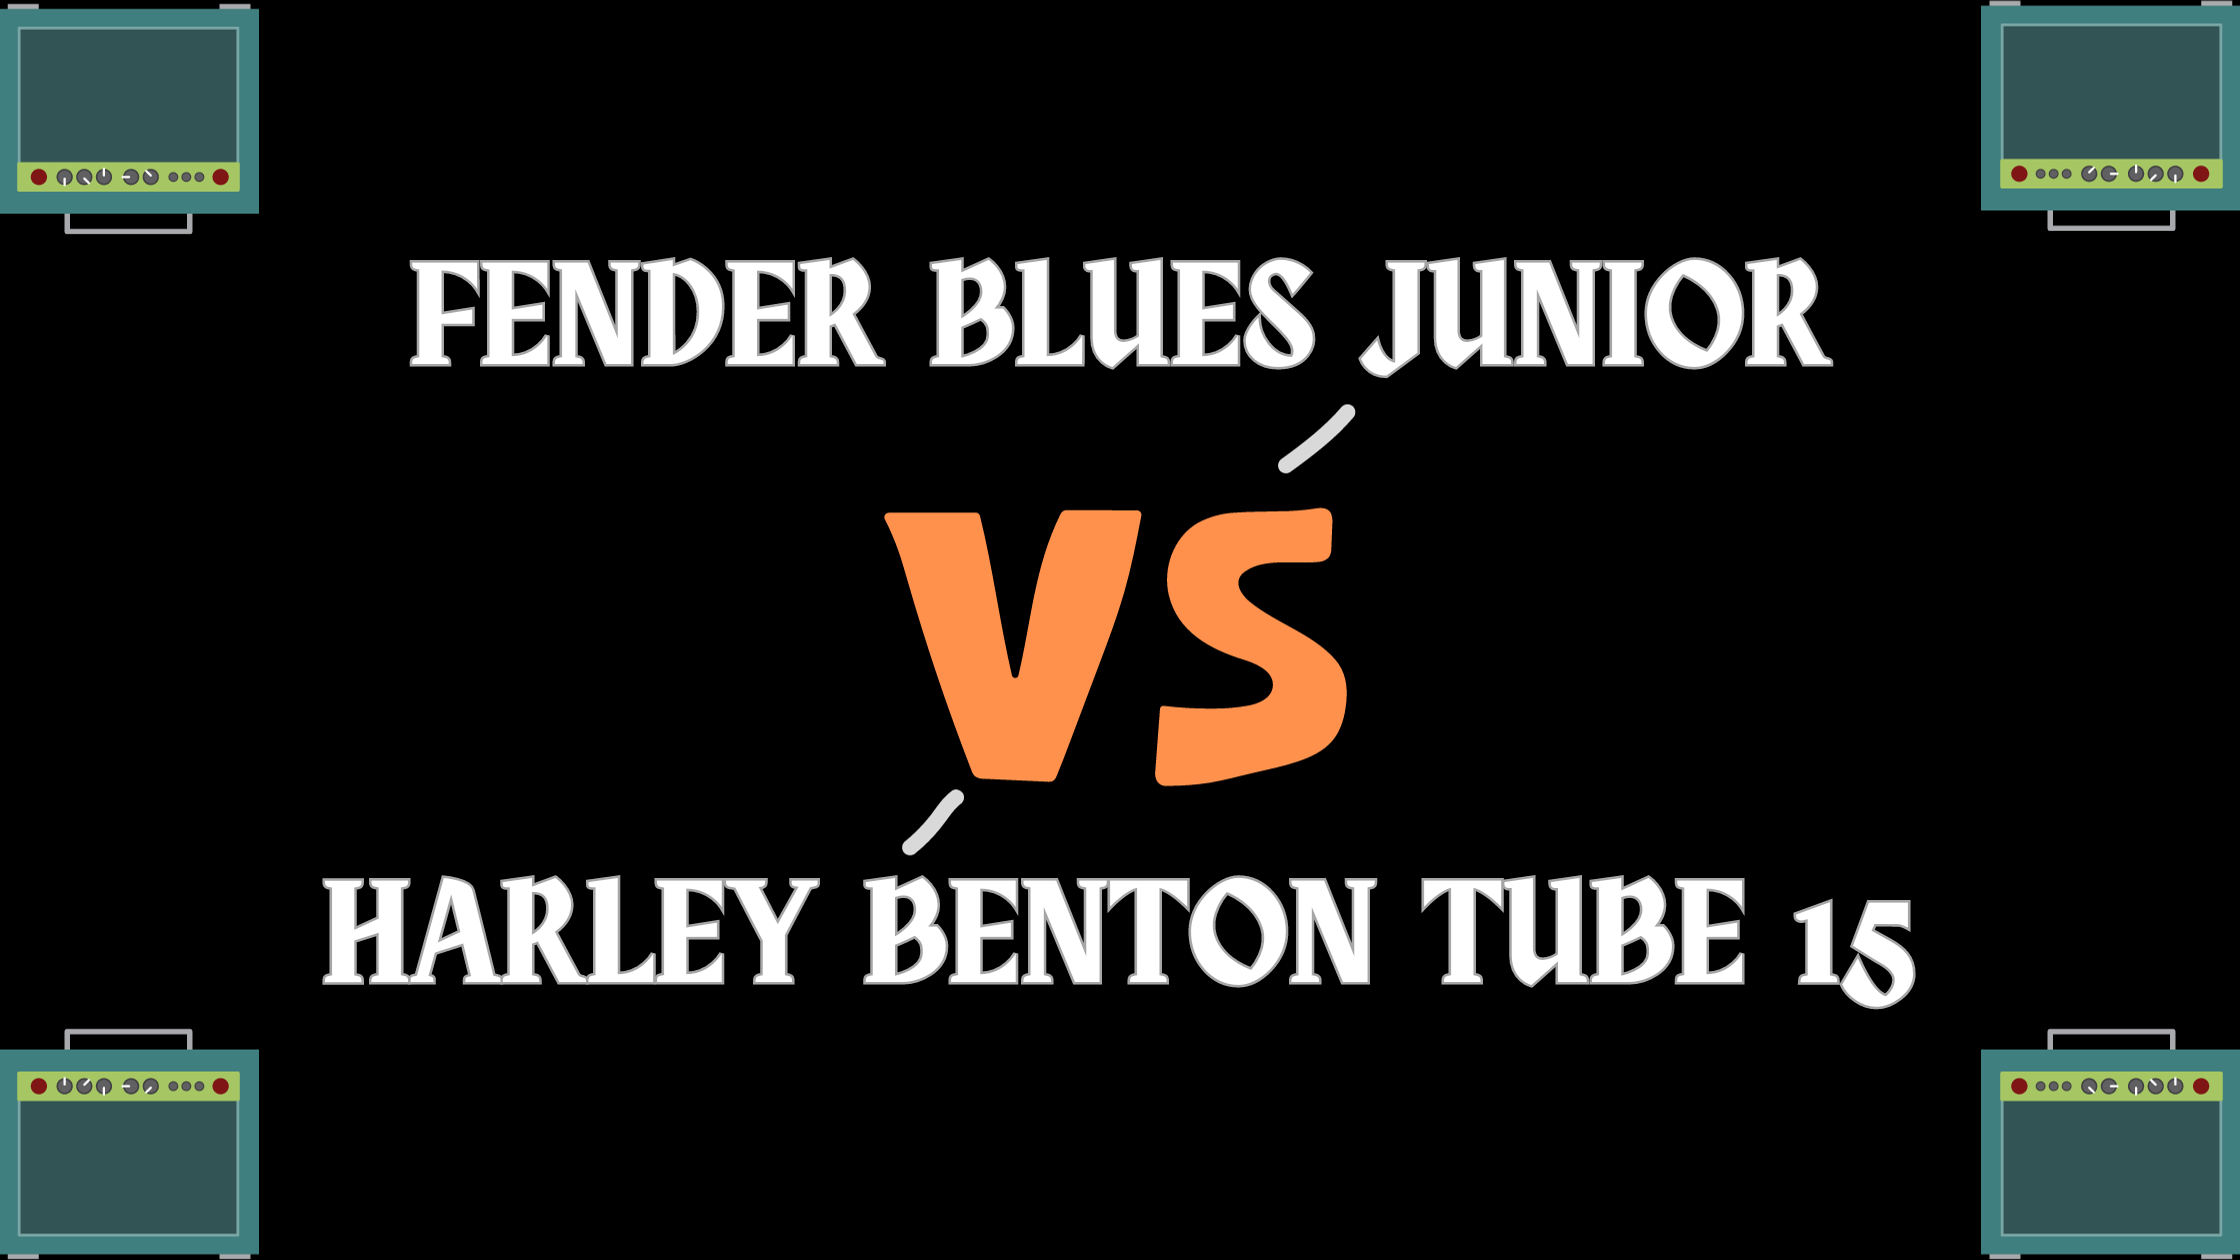 Fender Blues Junior IV versus Harley Benton Tube15 Celestion Comparison vs Review Article reviewing guitar tube amps